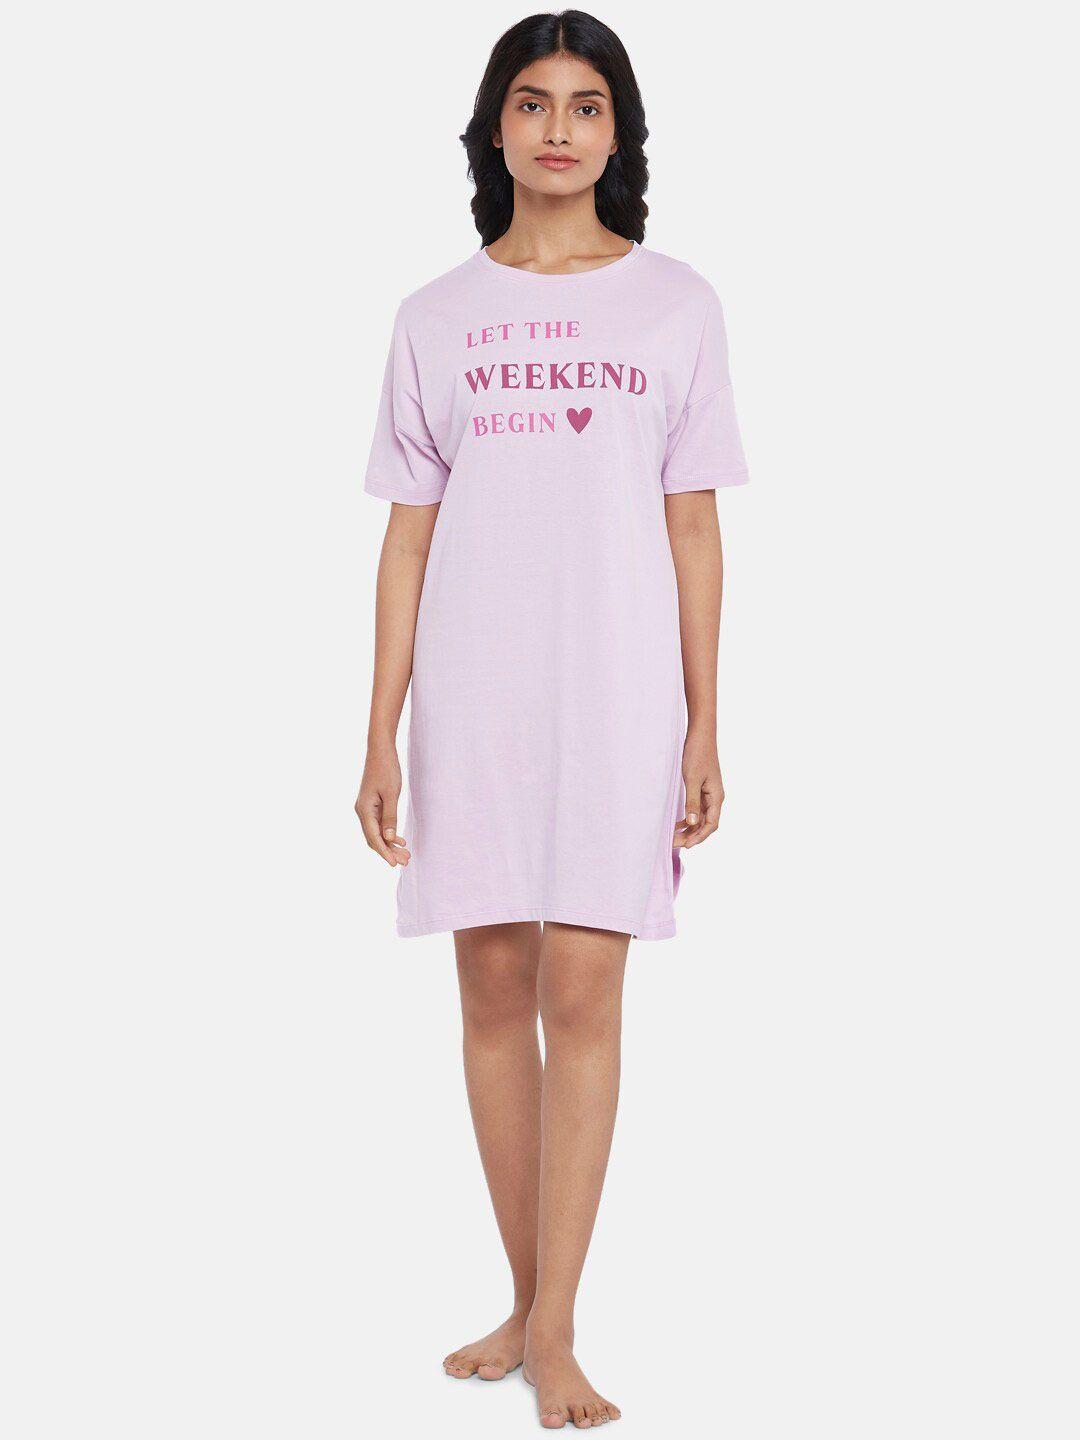 dreamz by pantaloons lavender printed t-shirt nightdress